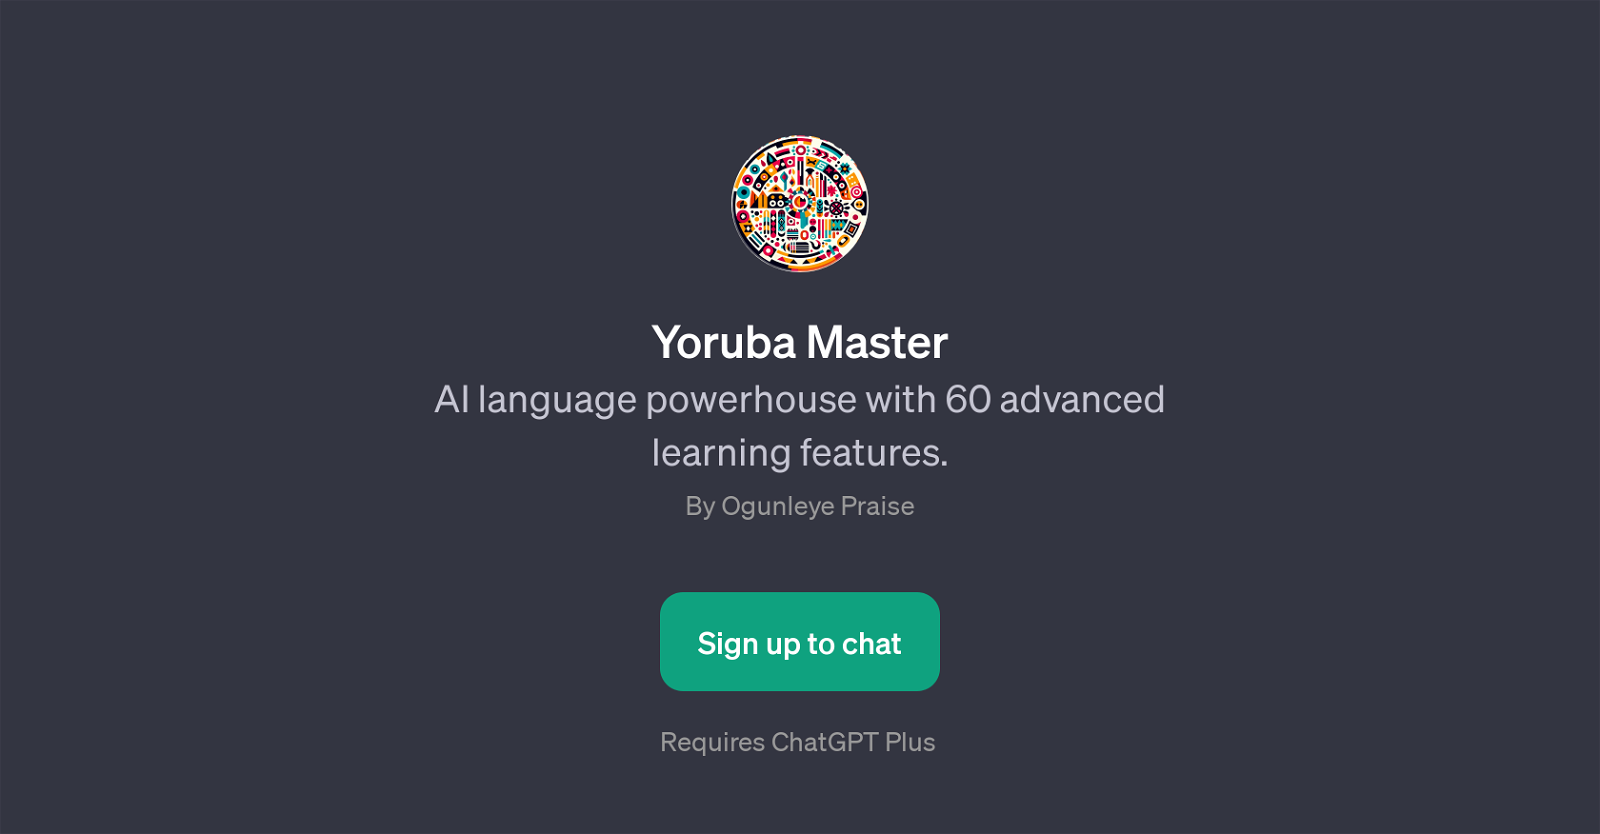 Yoruba Master website